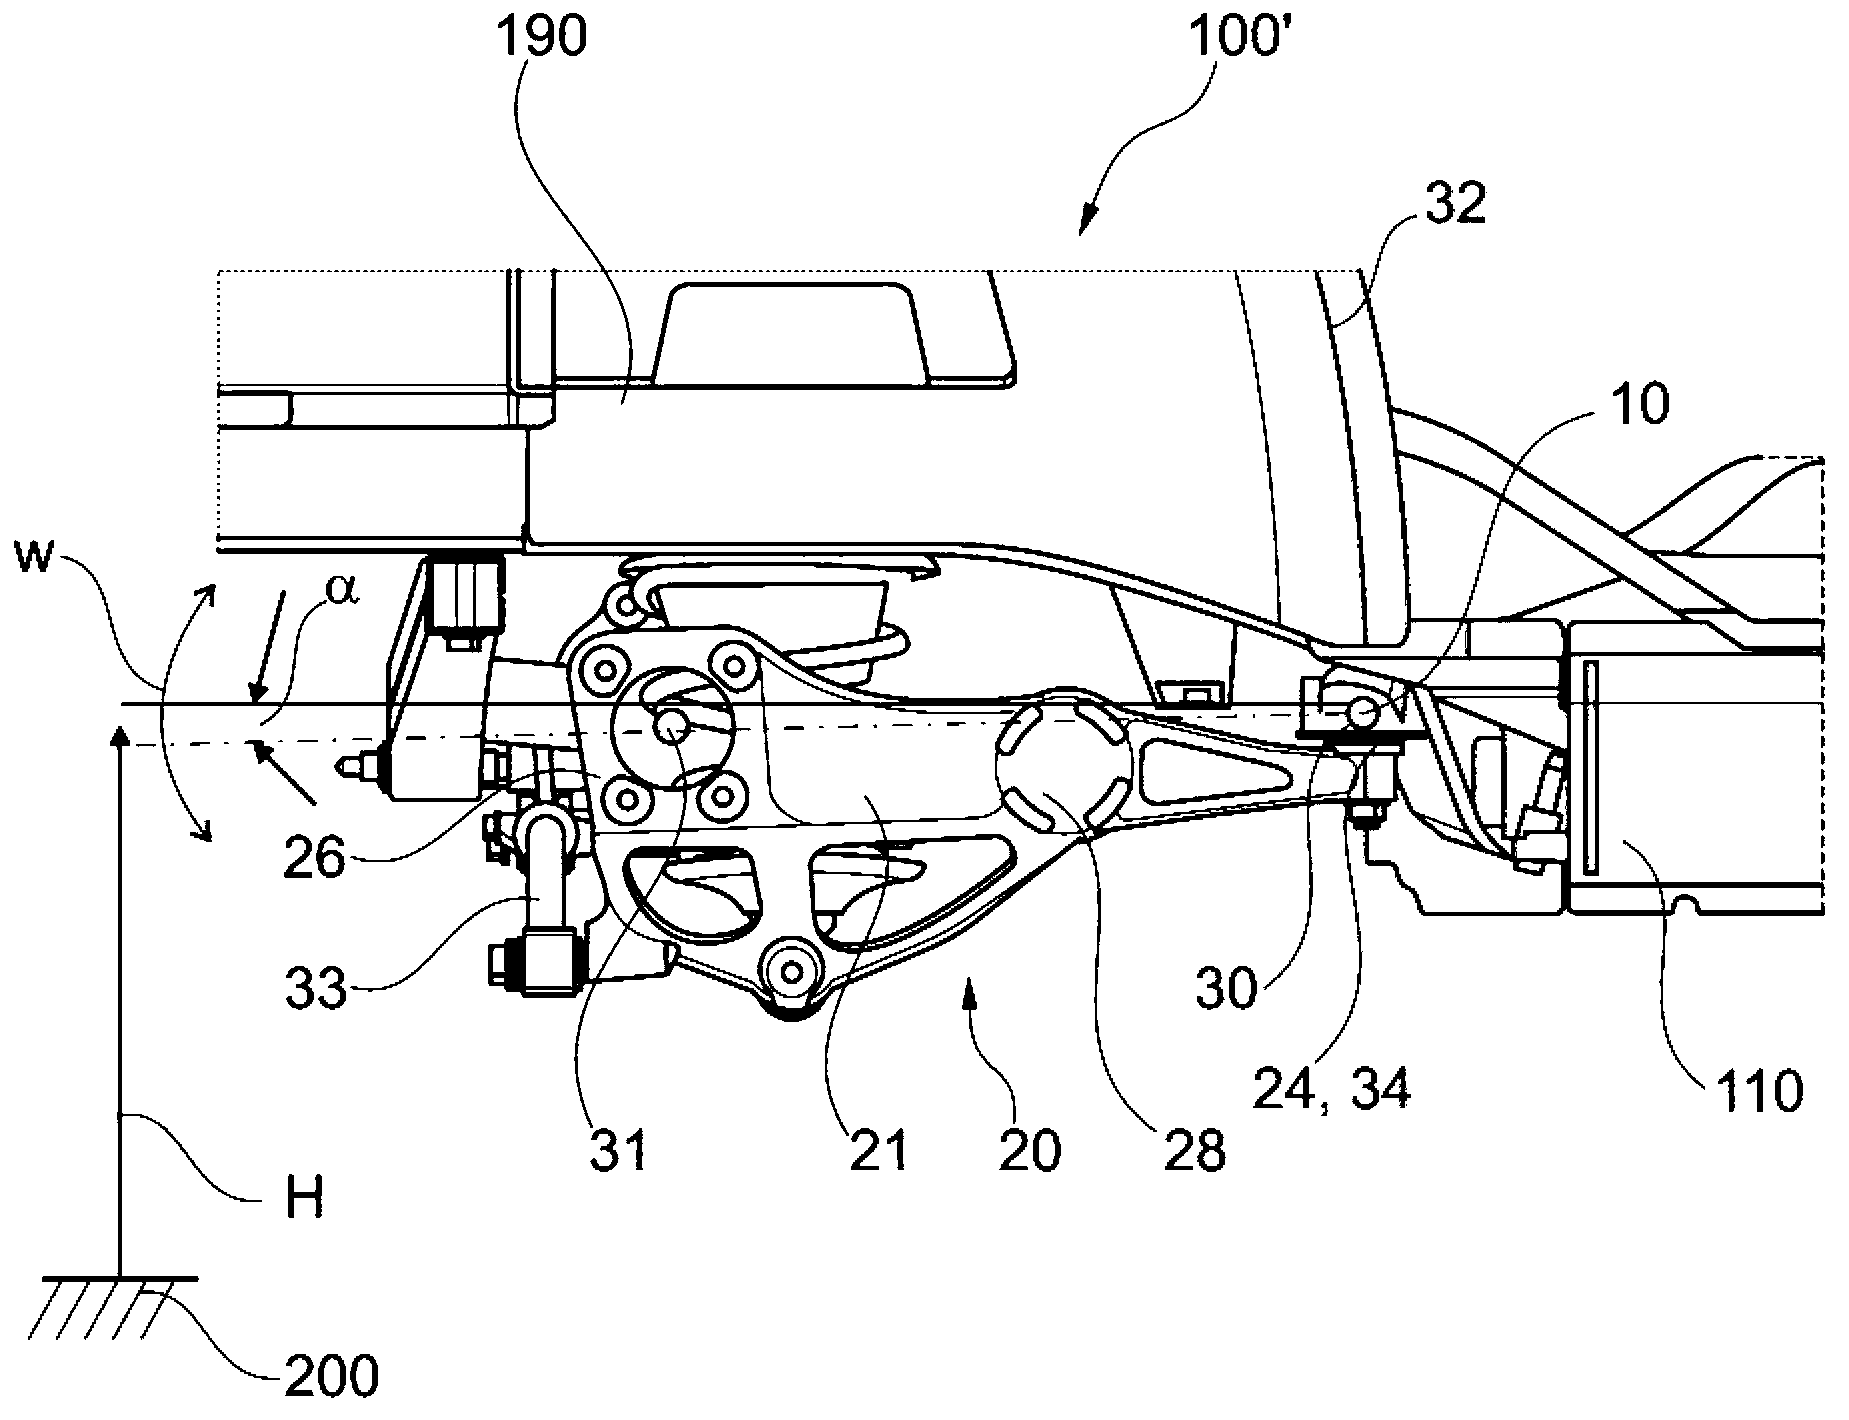 Vehicle with fuel filler line and rear compound crank arrangement